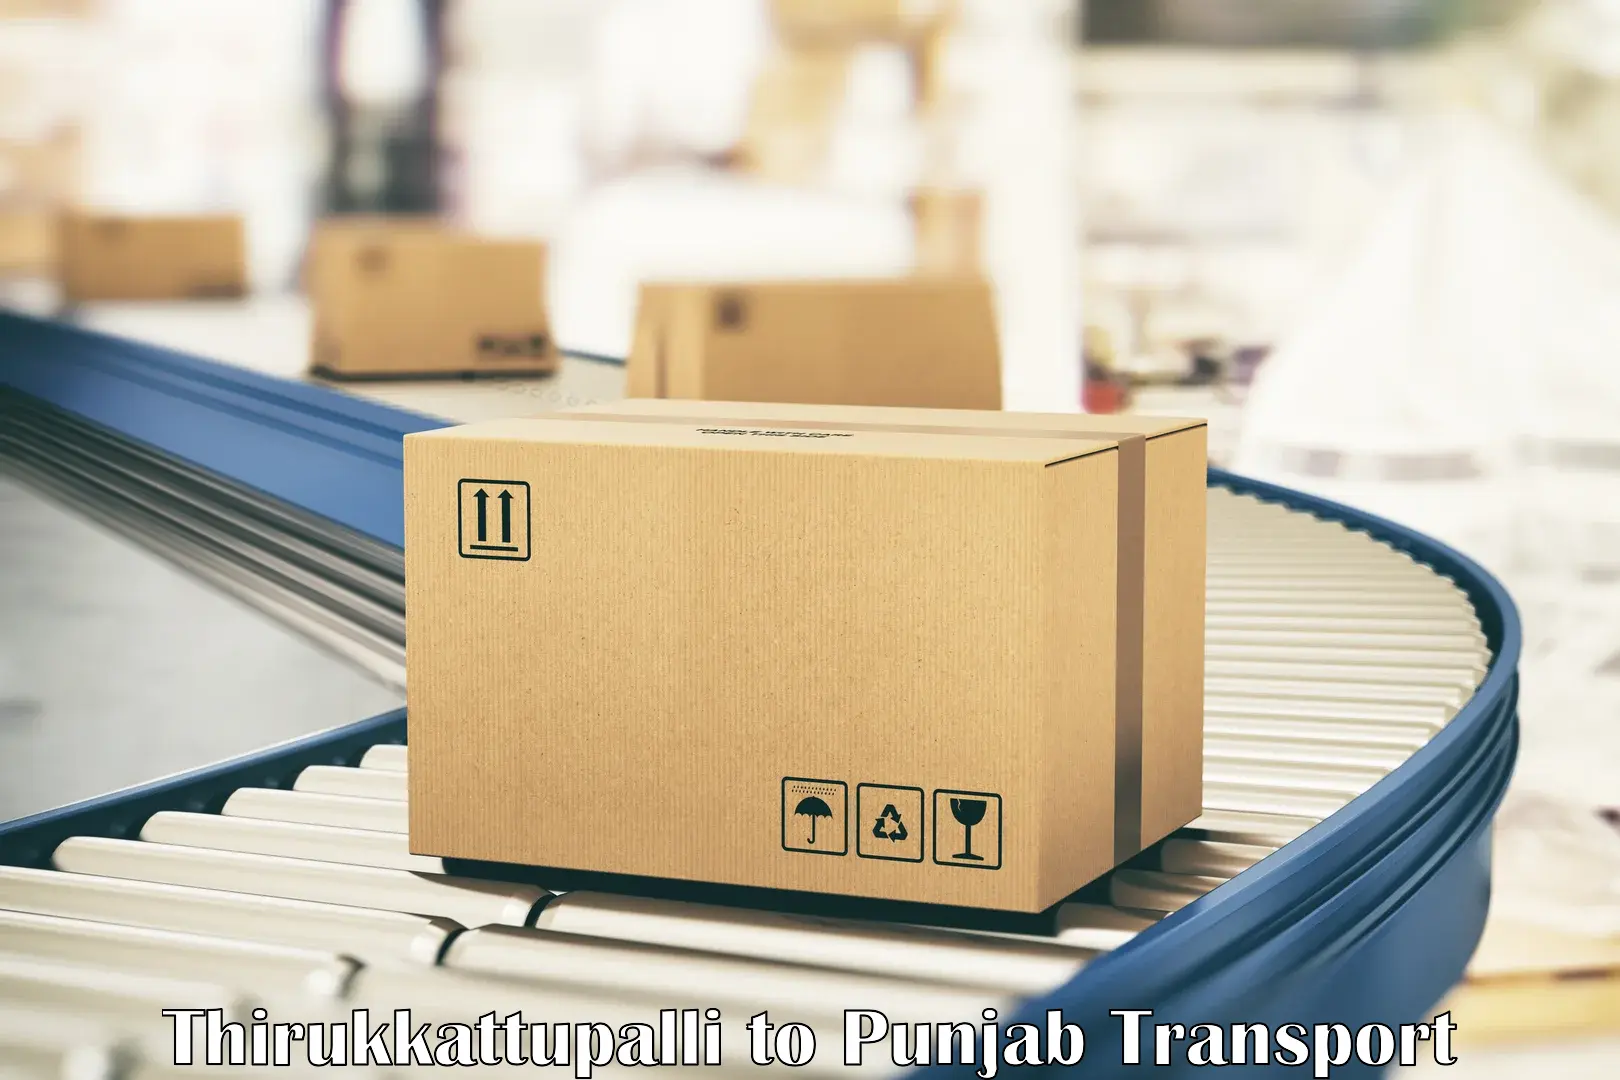 India truck logistics services Thirukkattupalli to Barnala